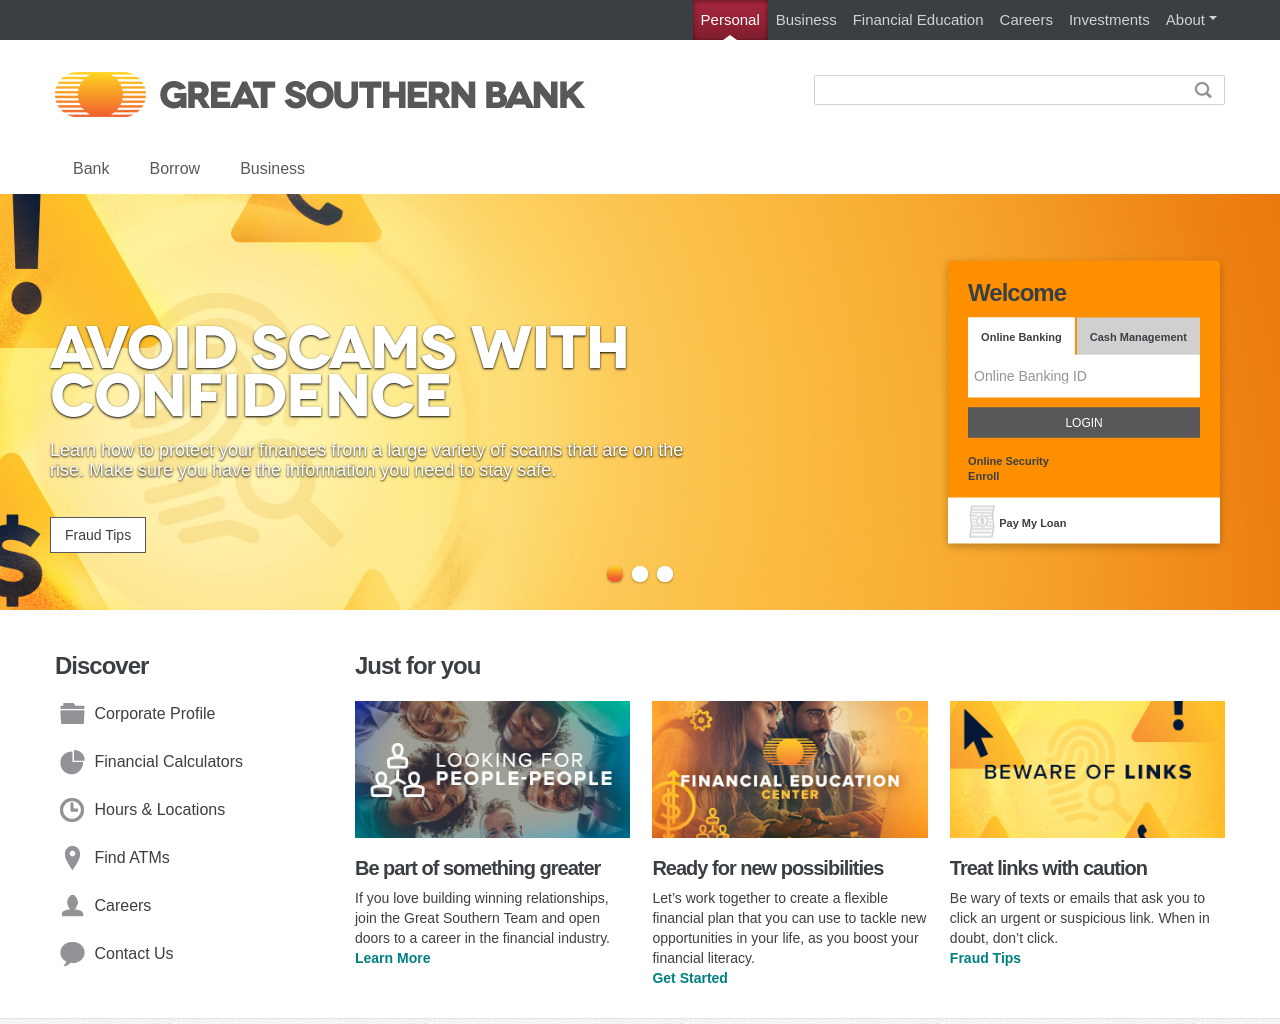 greatsouthernbank.com